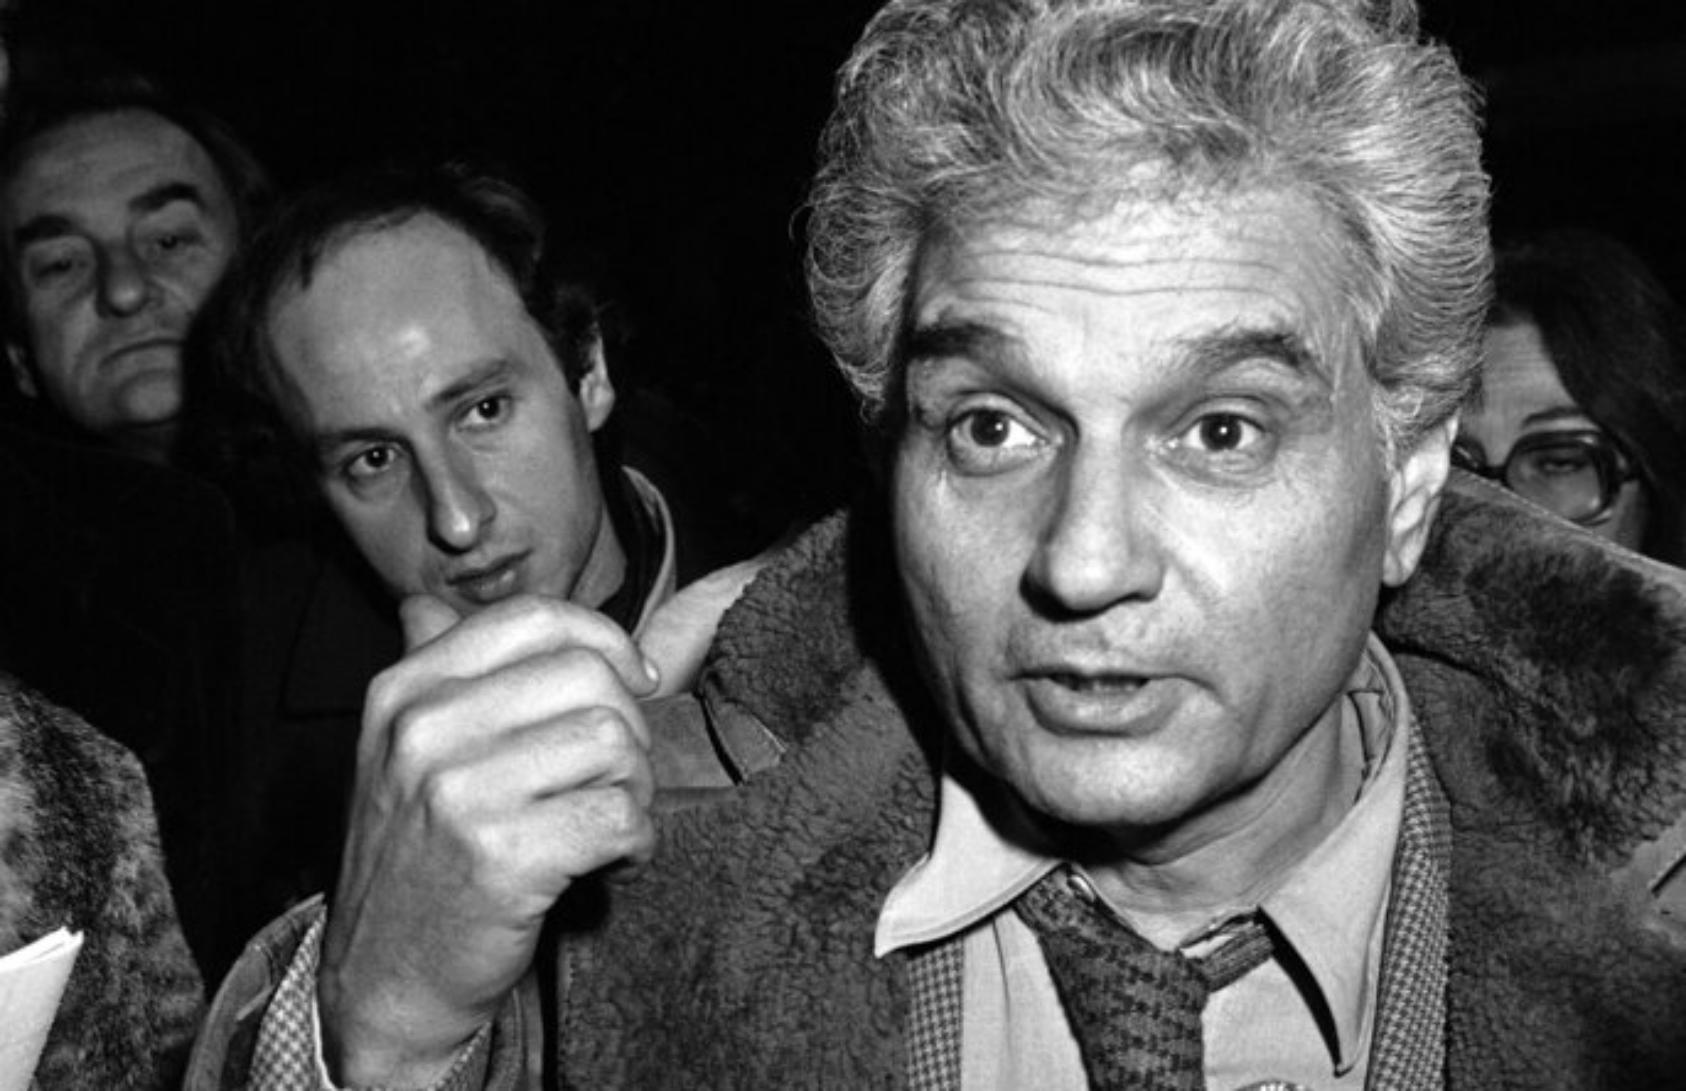 Jacque Derrida: Η σκέψη του αμφισβητήθηκε όμως παραμένει ζωντανή